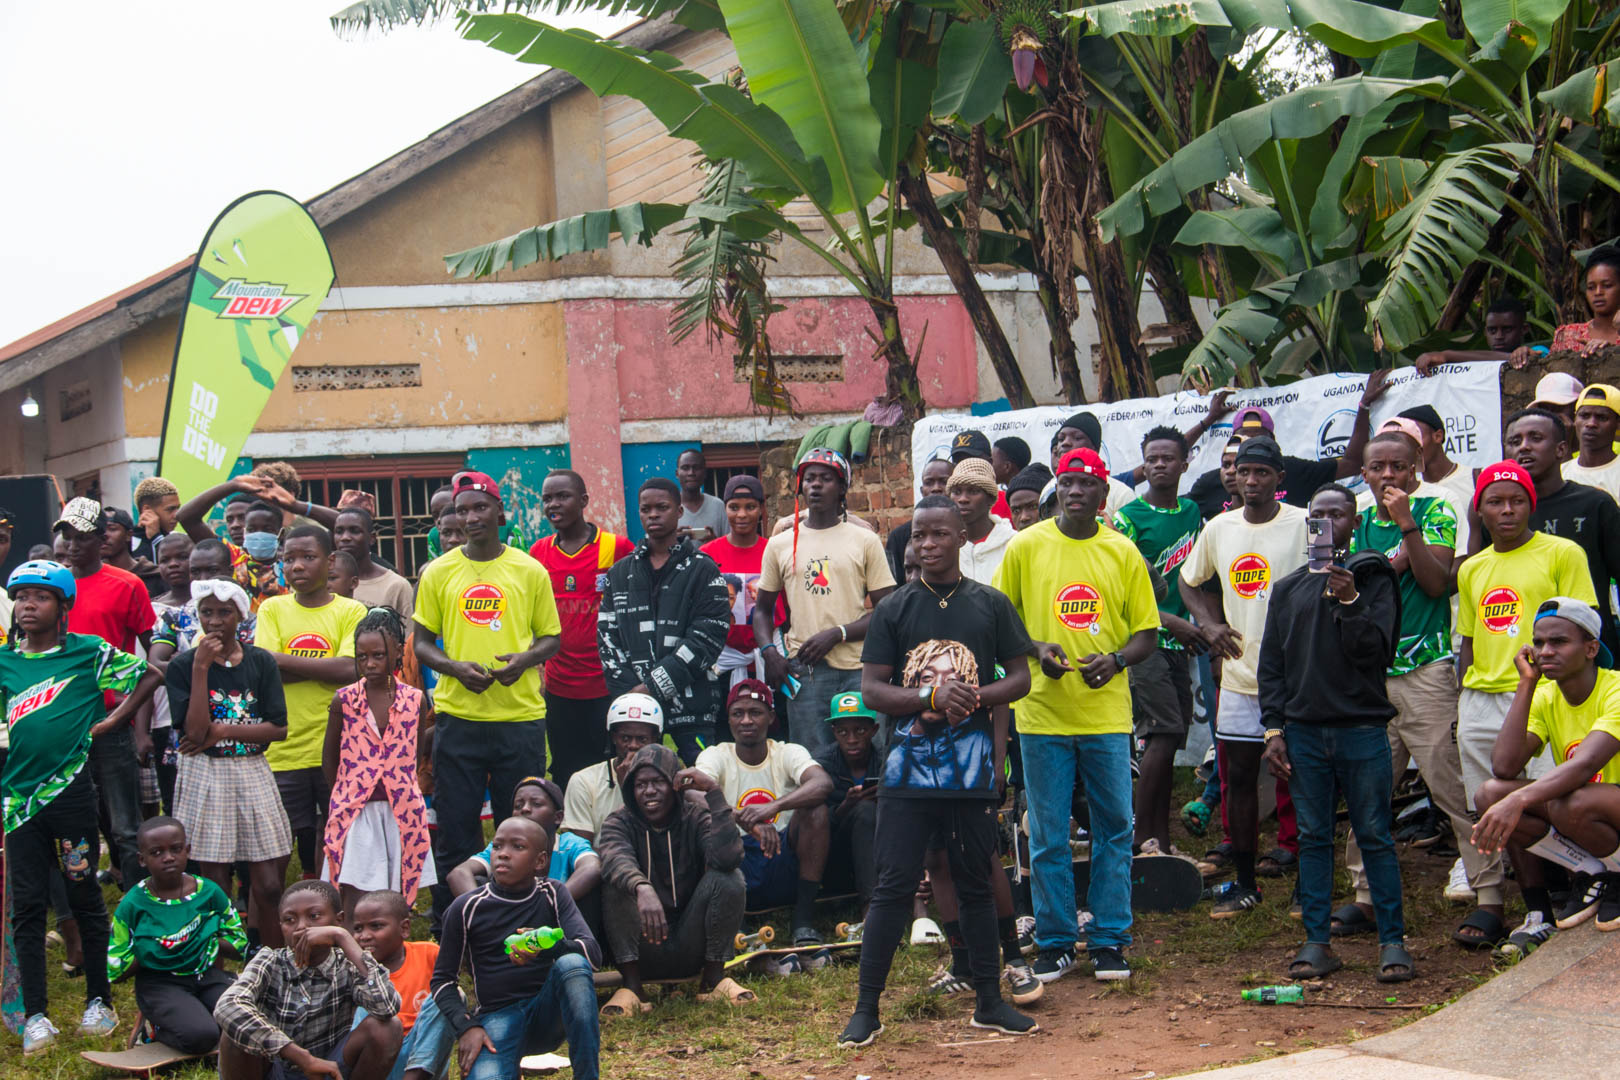 Dope Games Uganda Skateboarding Championship Unleashes Thrills Despite Rainy Challenge